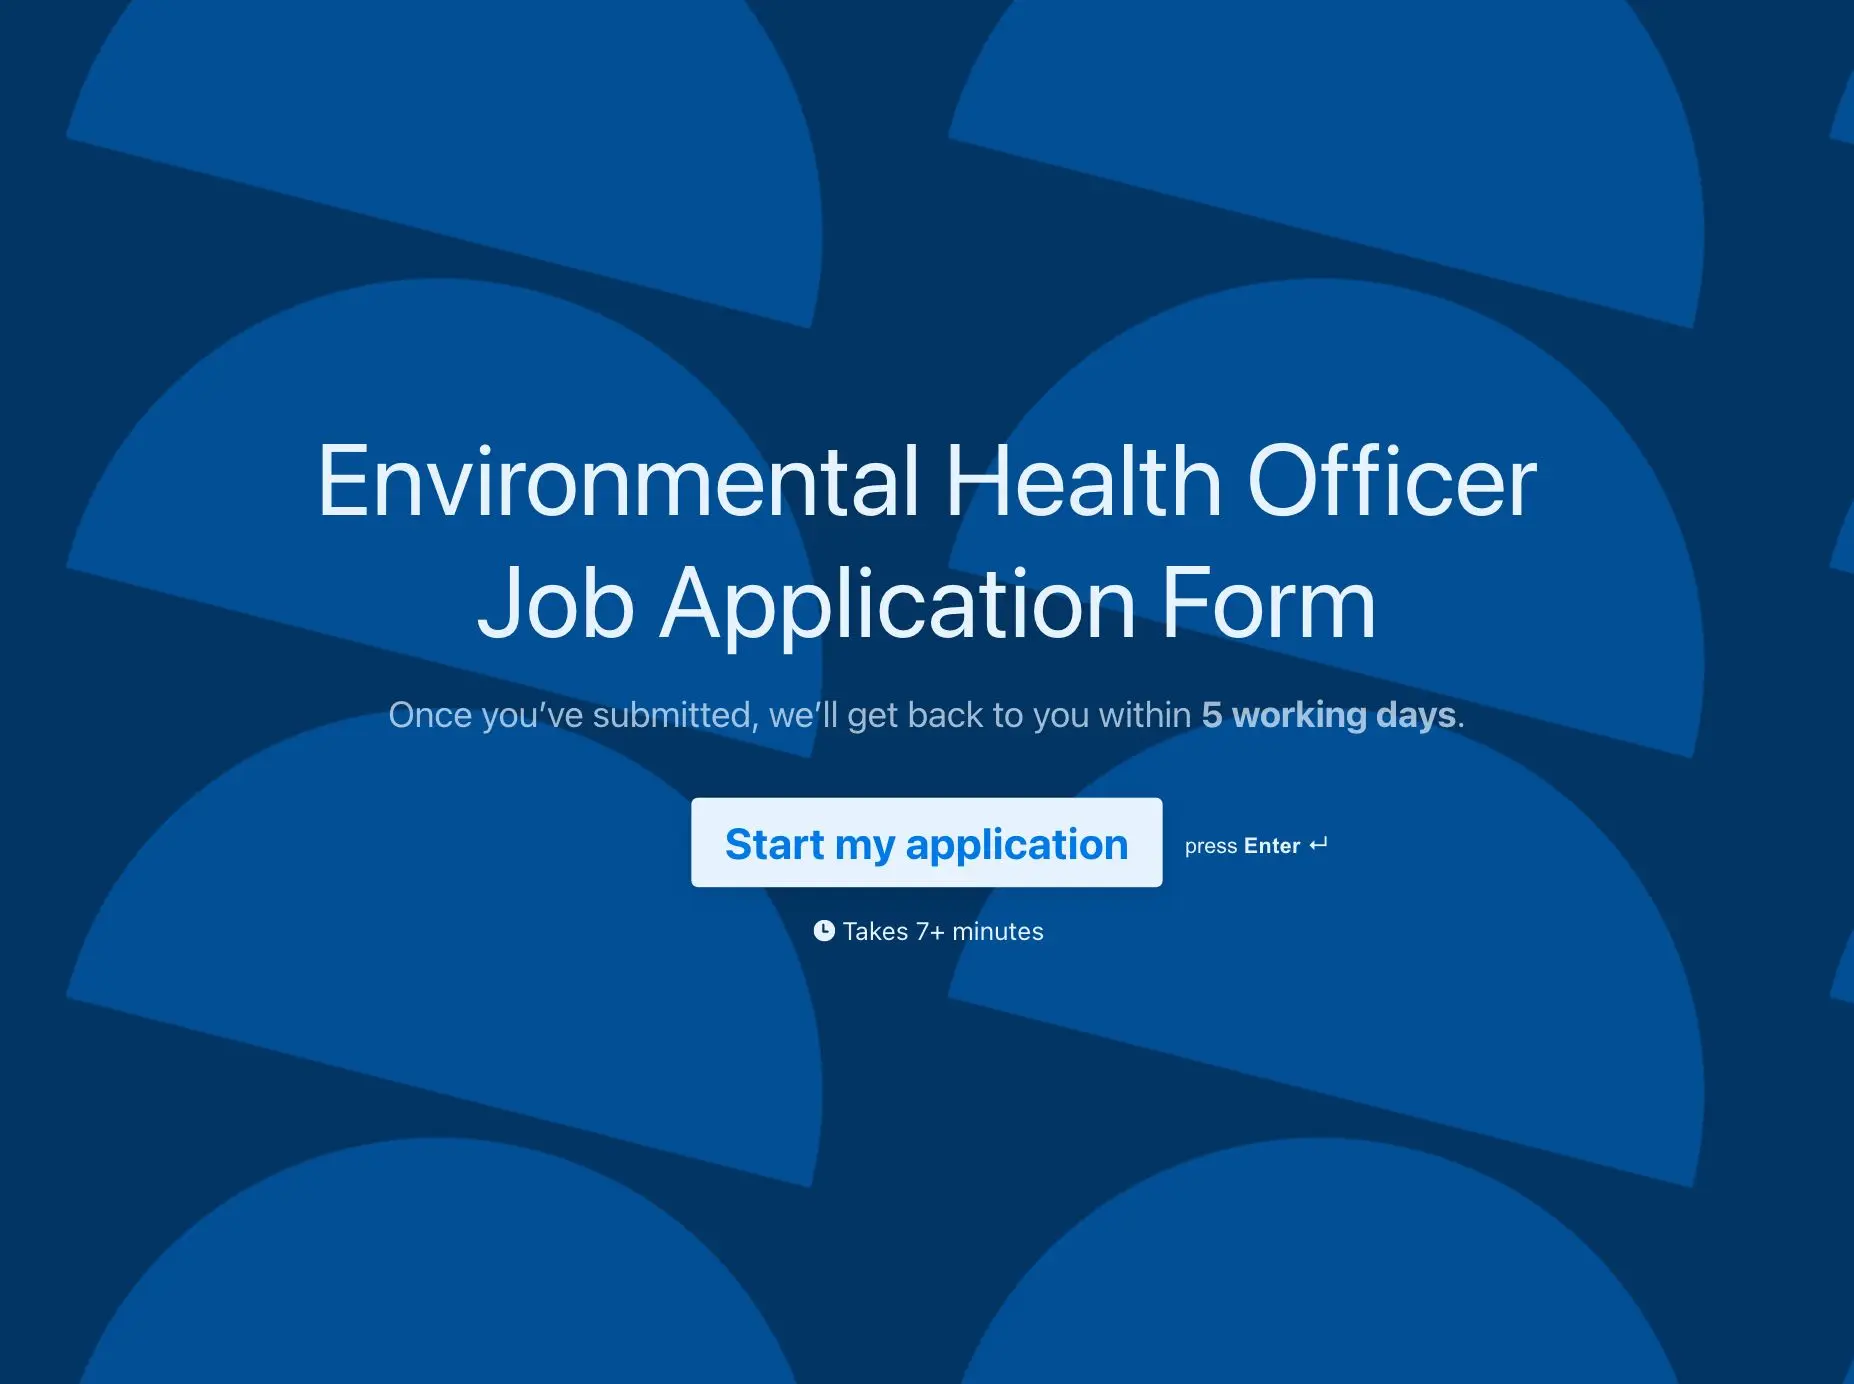 Environmental Health Officer Job Application Form Template Hero